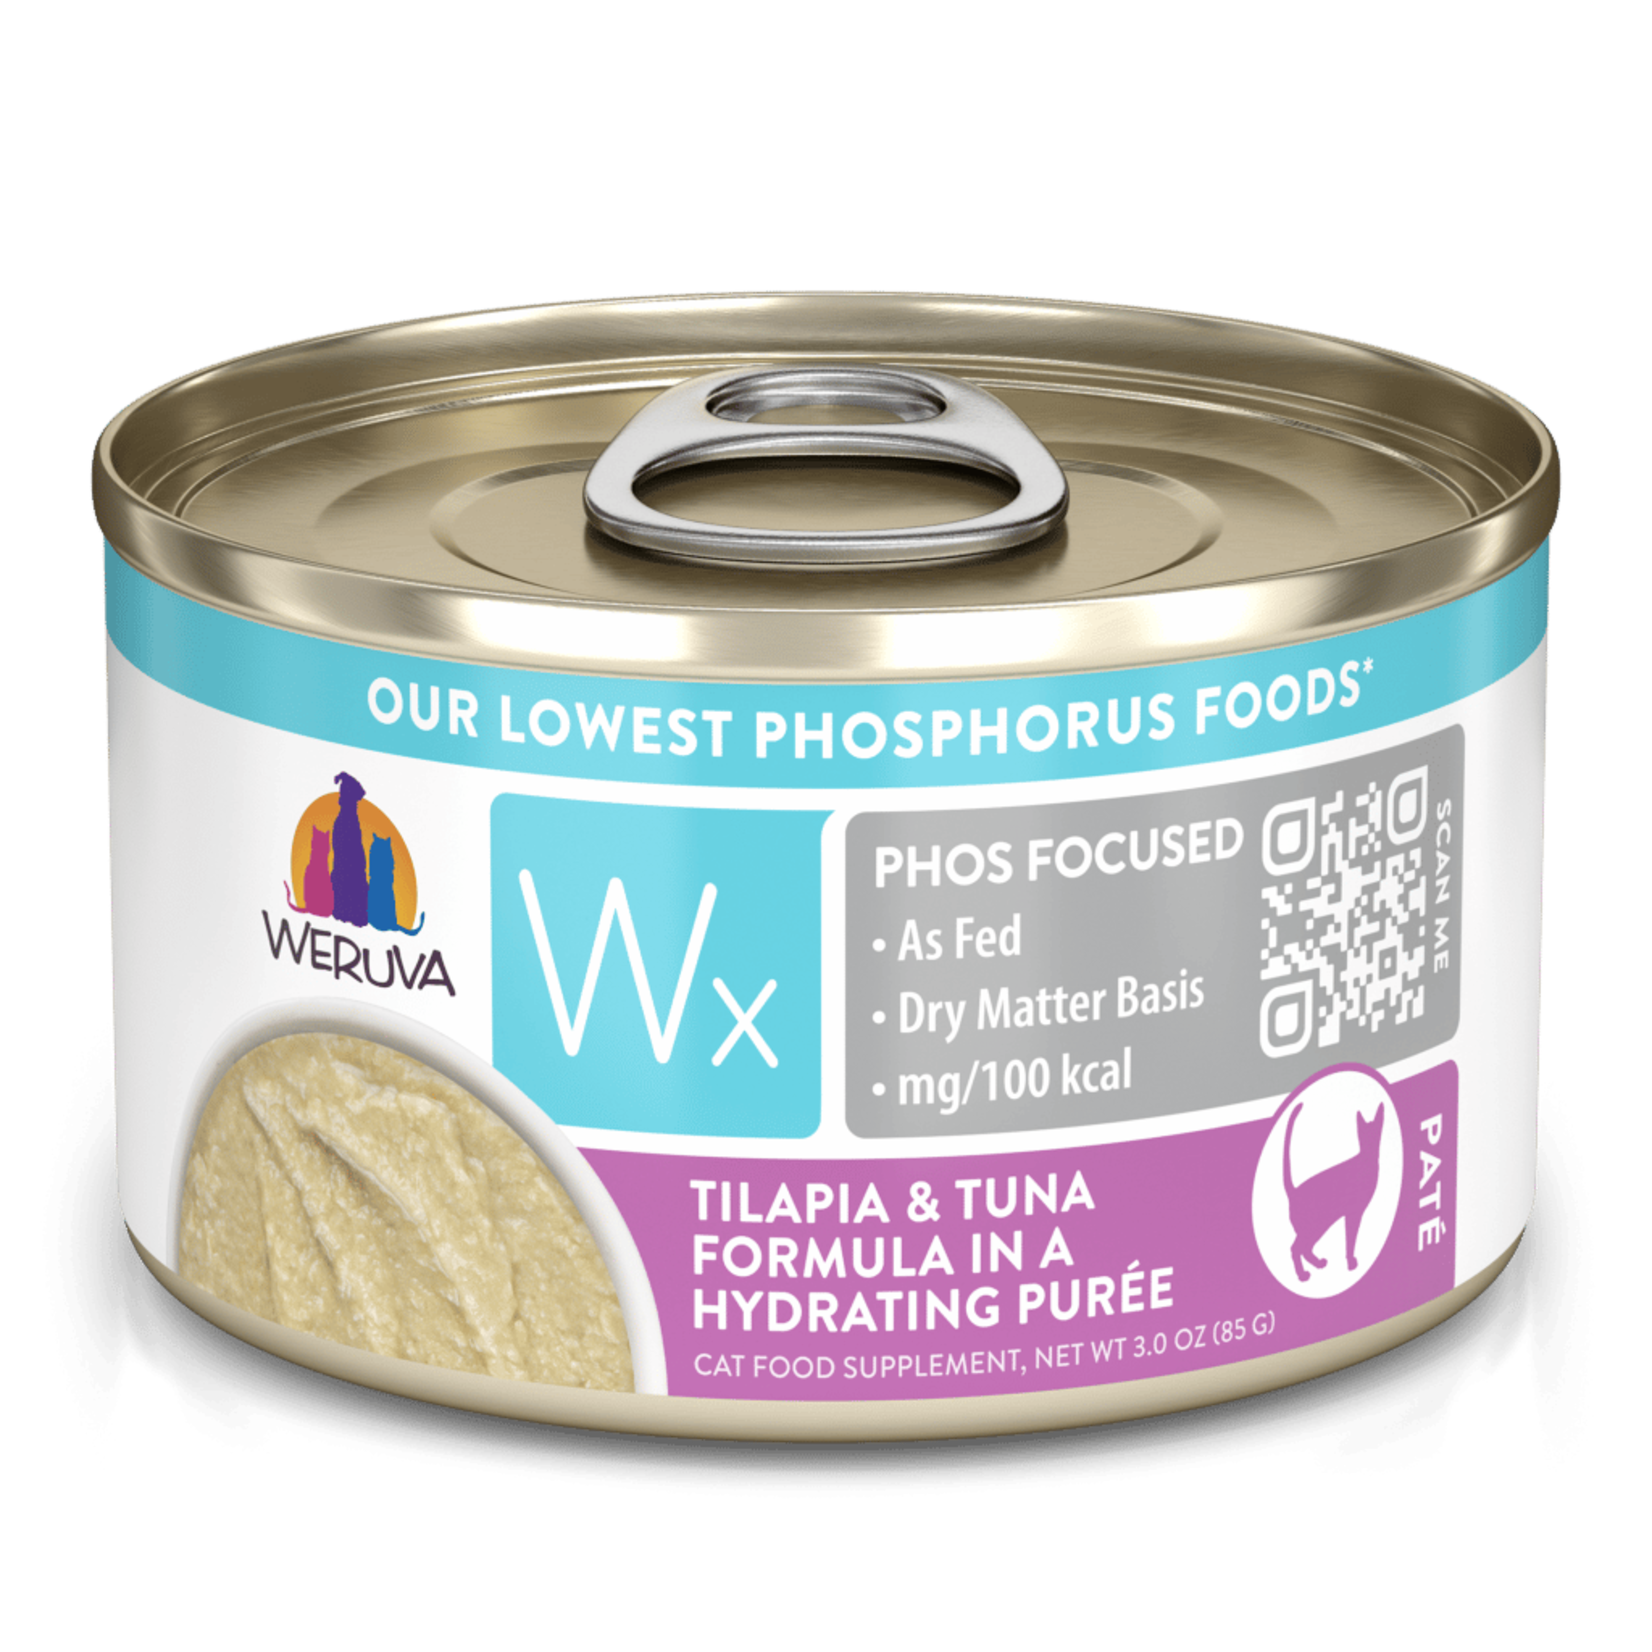 Weruva Wx Phos Focused Tilapia & Tuna Formula in a Hydrating Puree